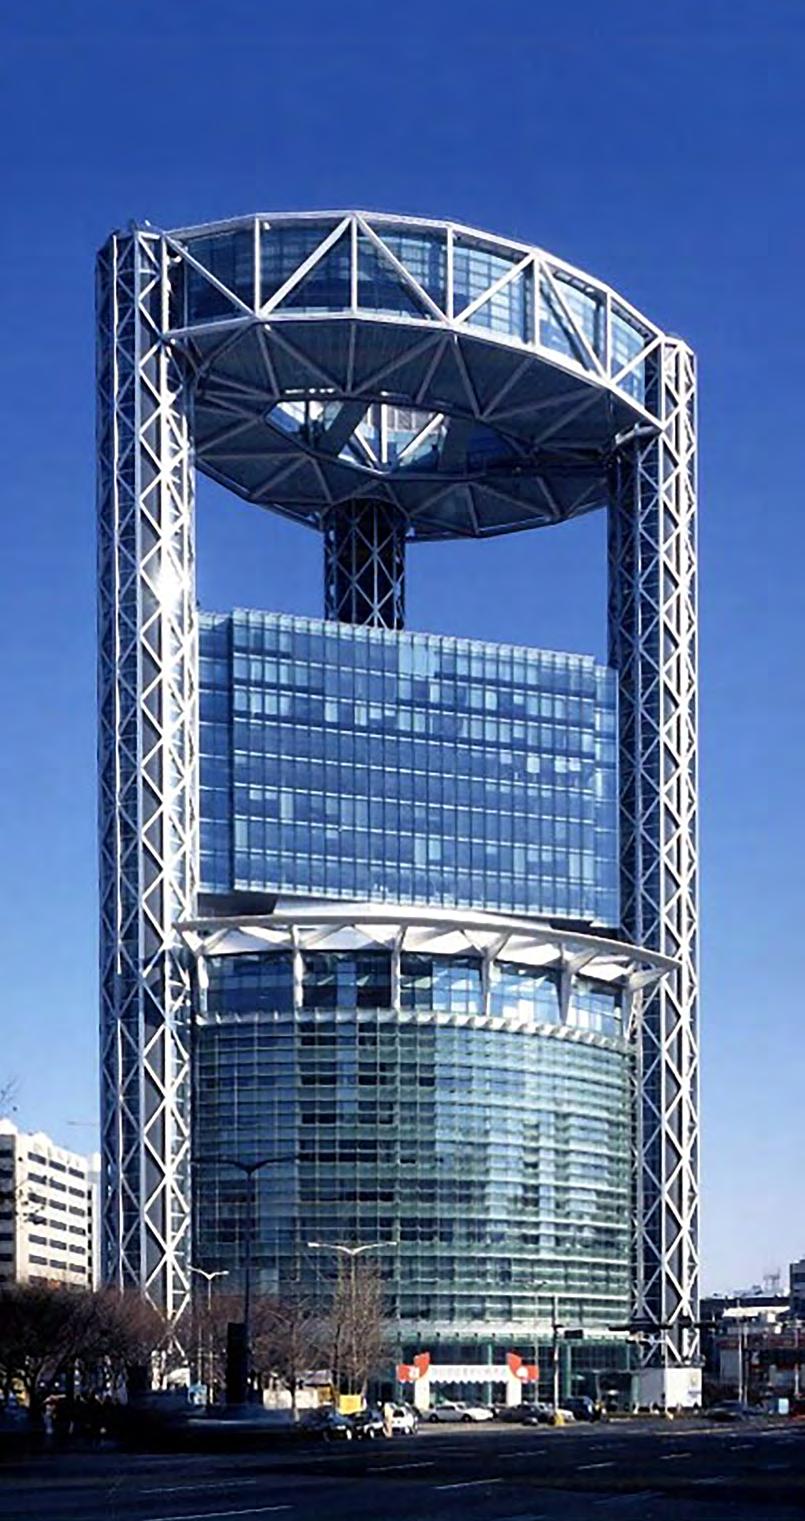 SEOUL Market Snapshot Jongno Tower a prime landmark in Seoul Built in 1999 and slated for renovation works